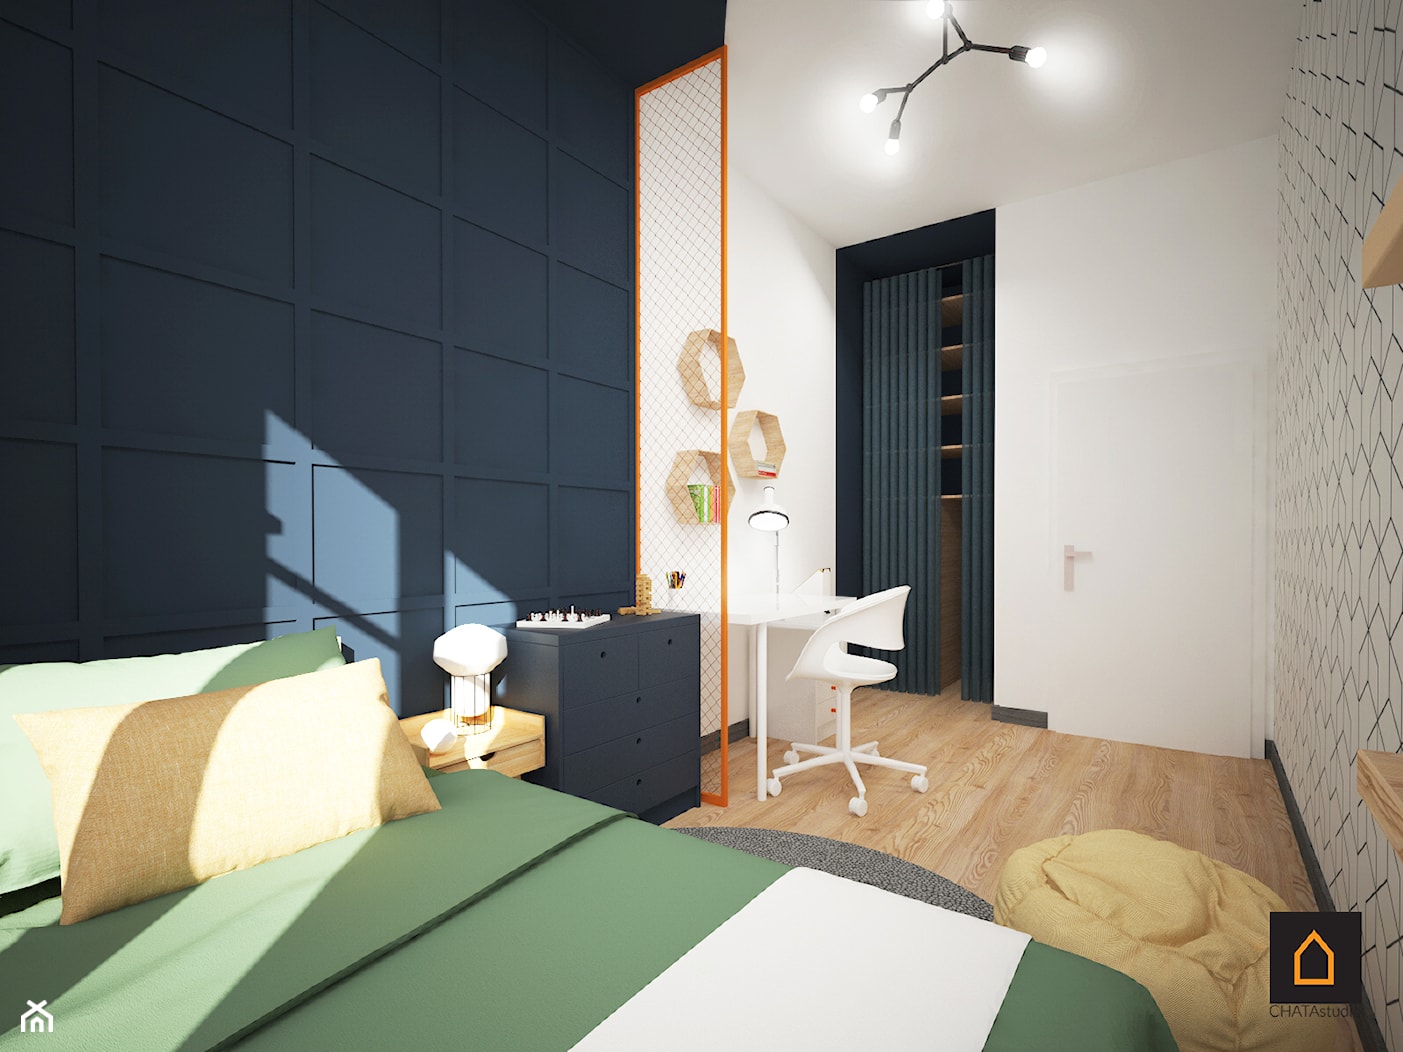 Pokój nastolatka - zdjęcie od CHATA studio - Homebook